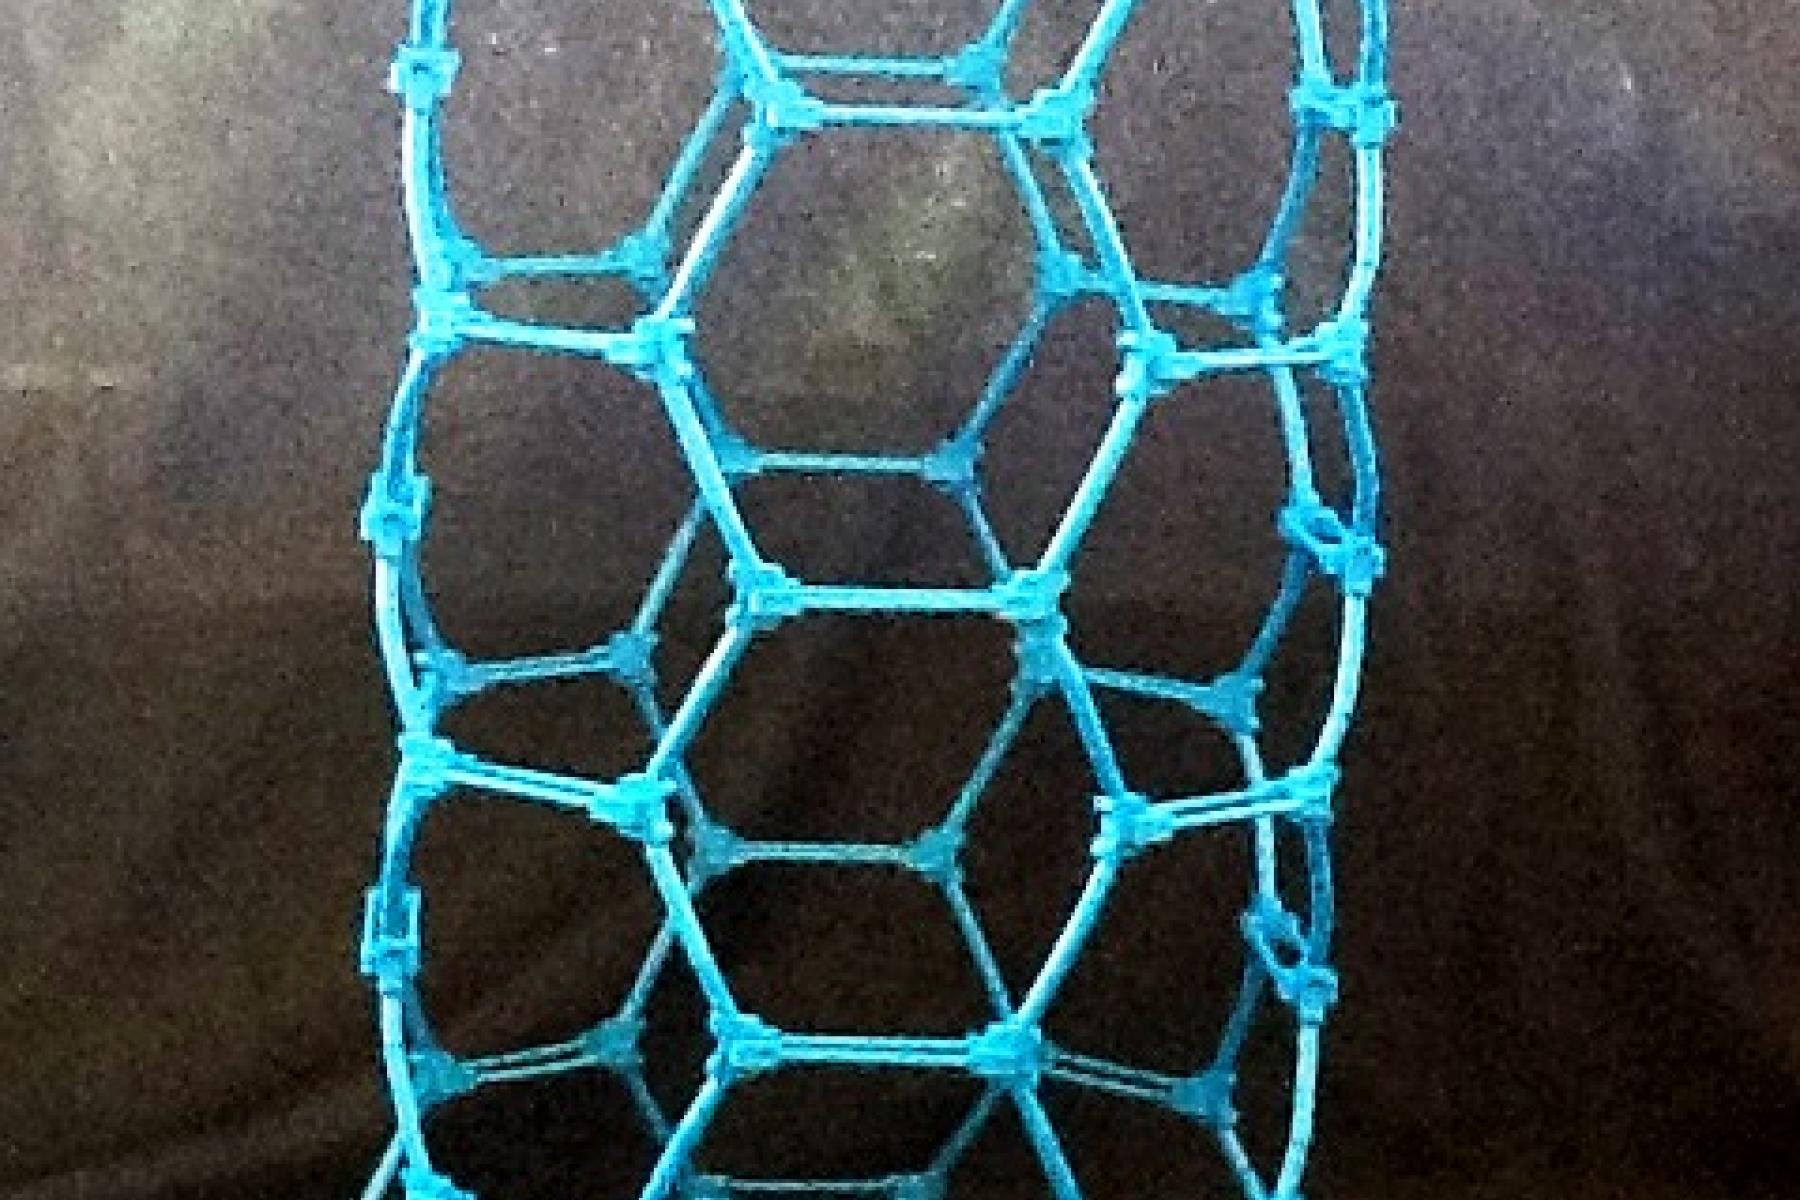 Carbon nanotube structure from nanotubes activity 